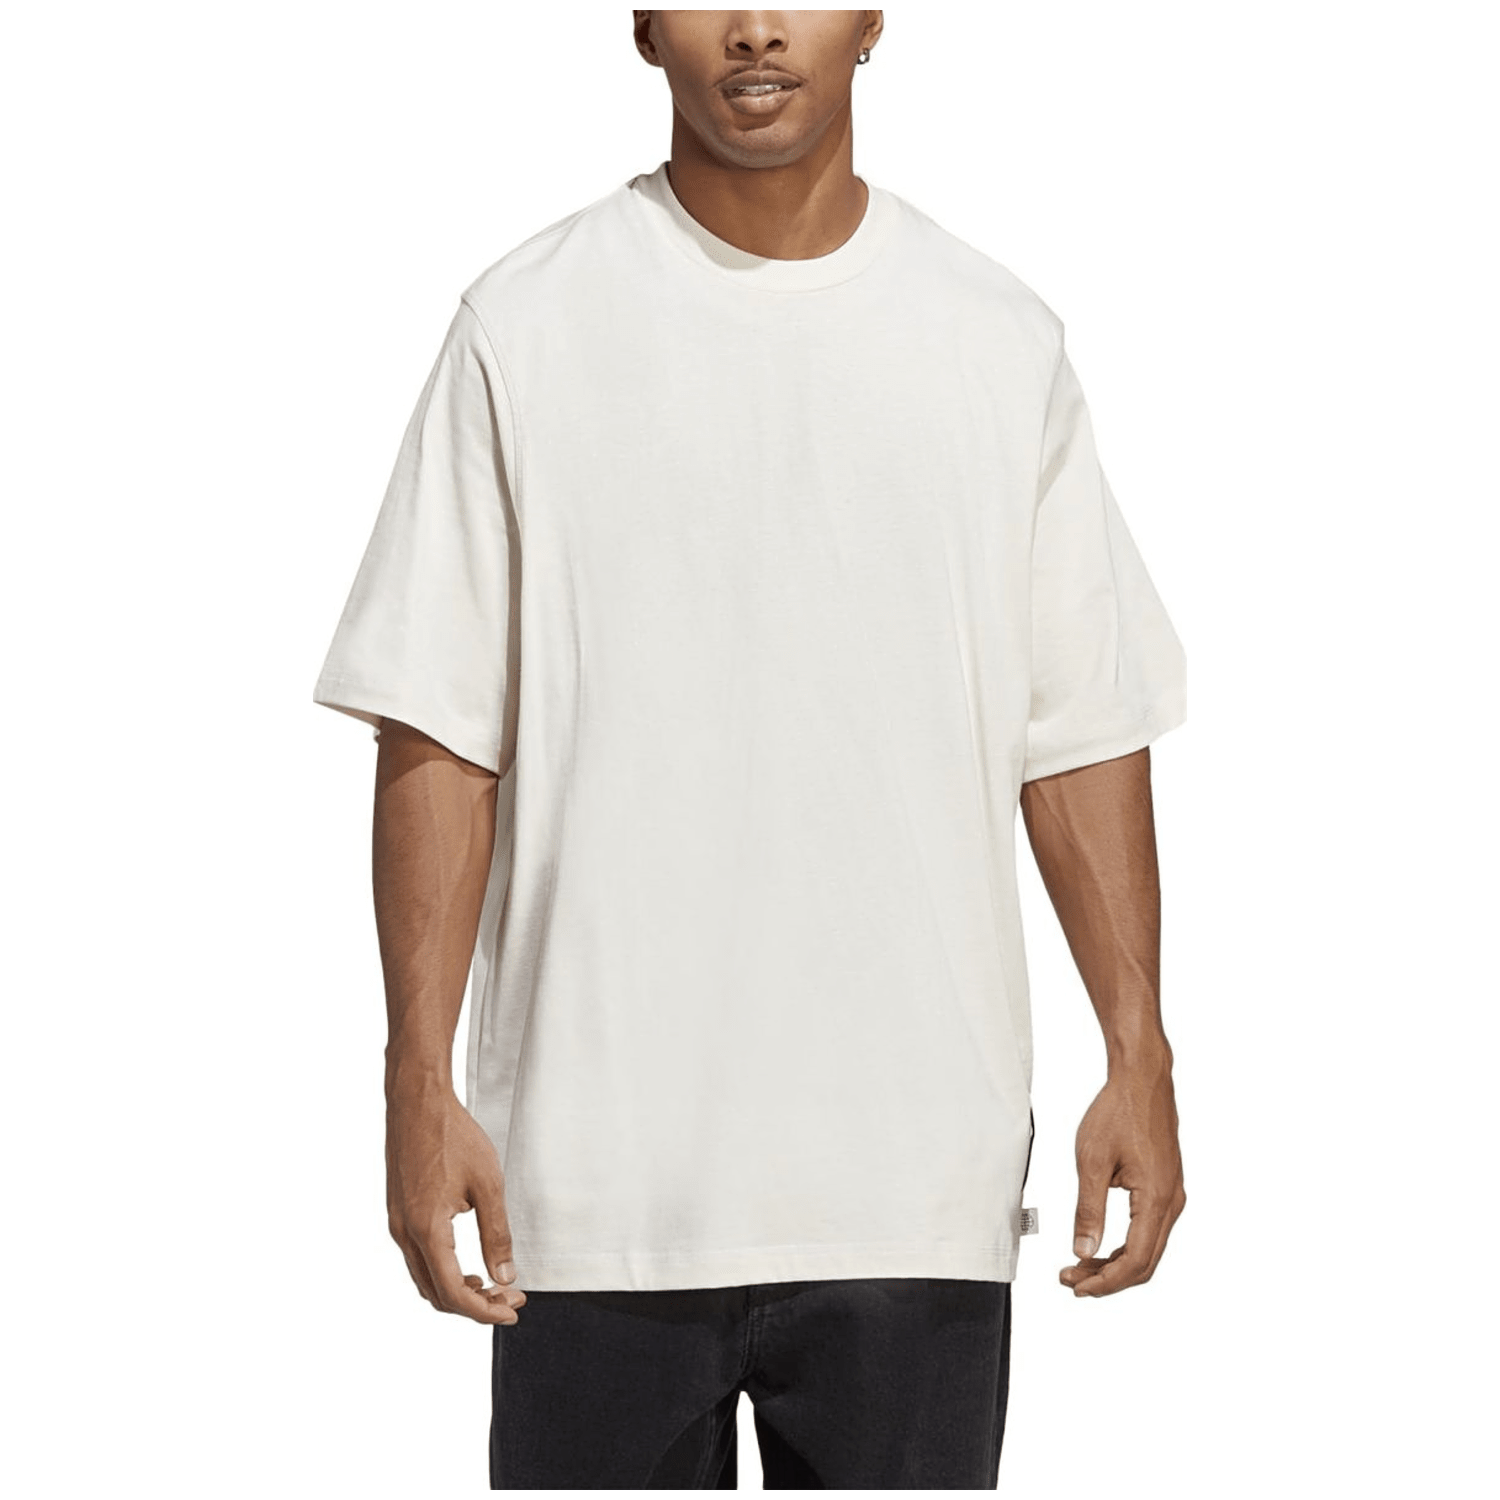 Adidas Lounge T-Shirt Herren